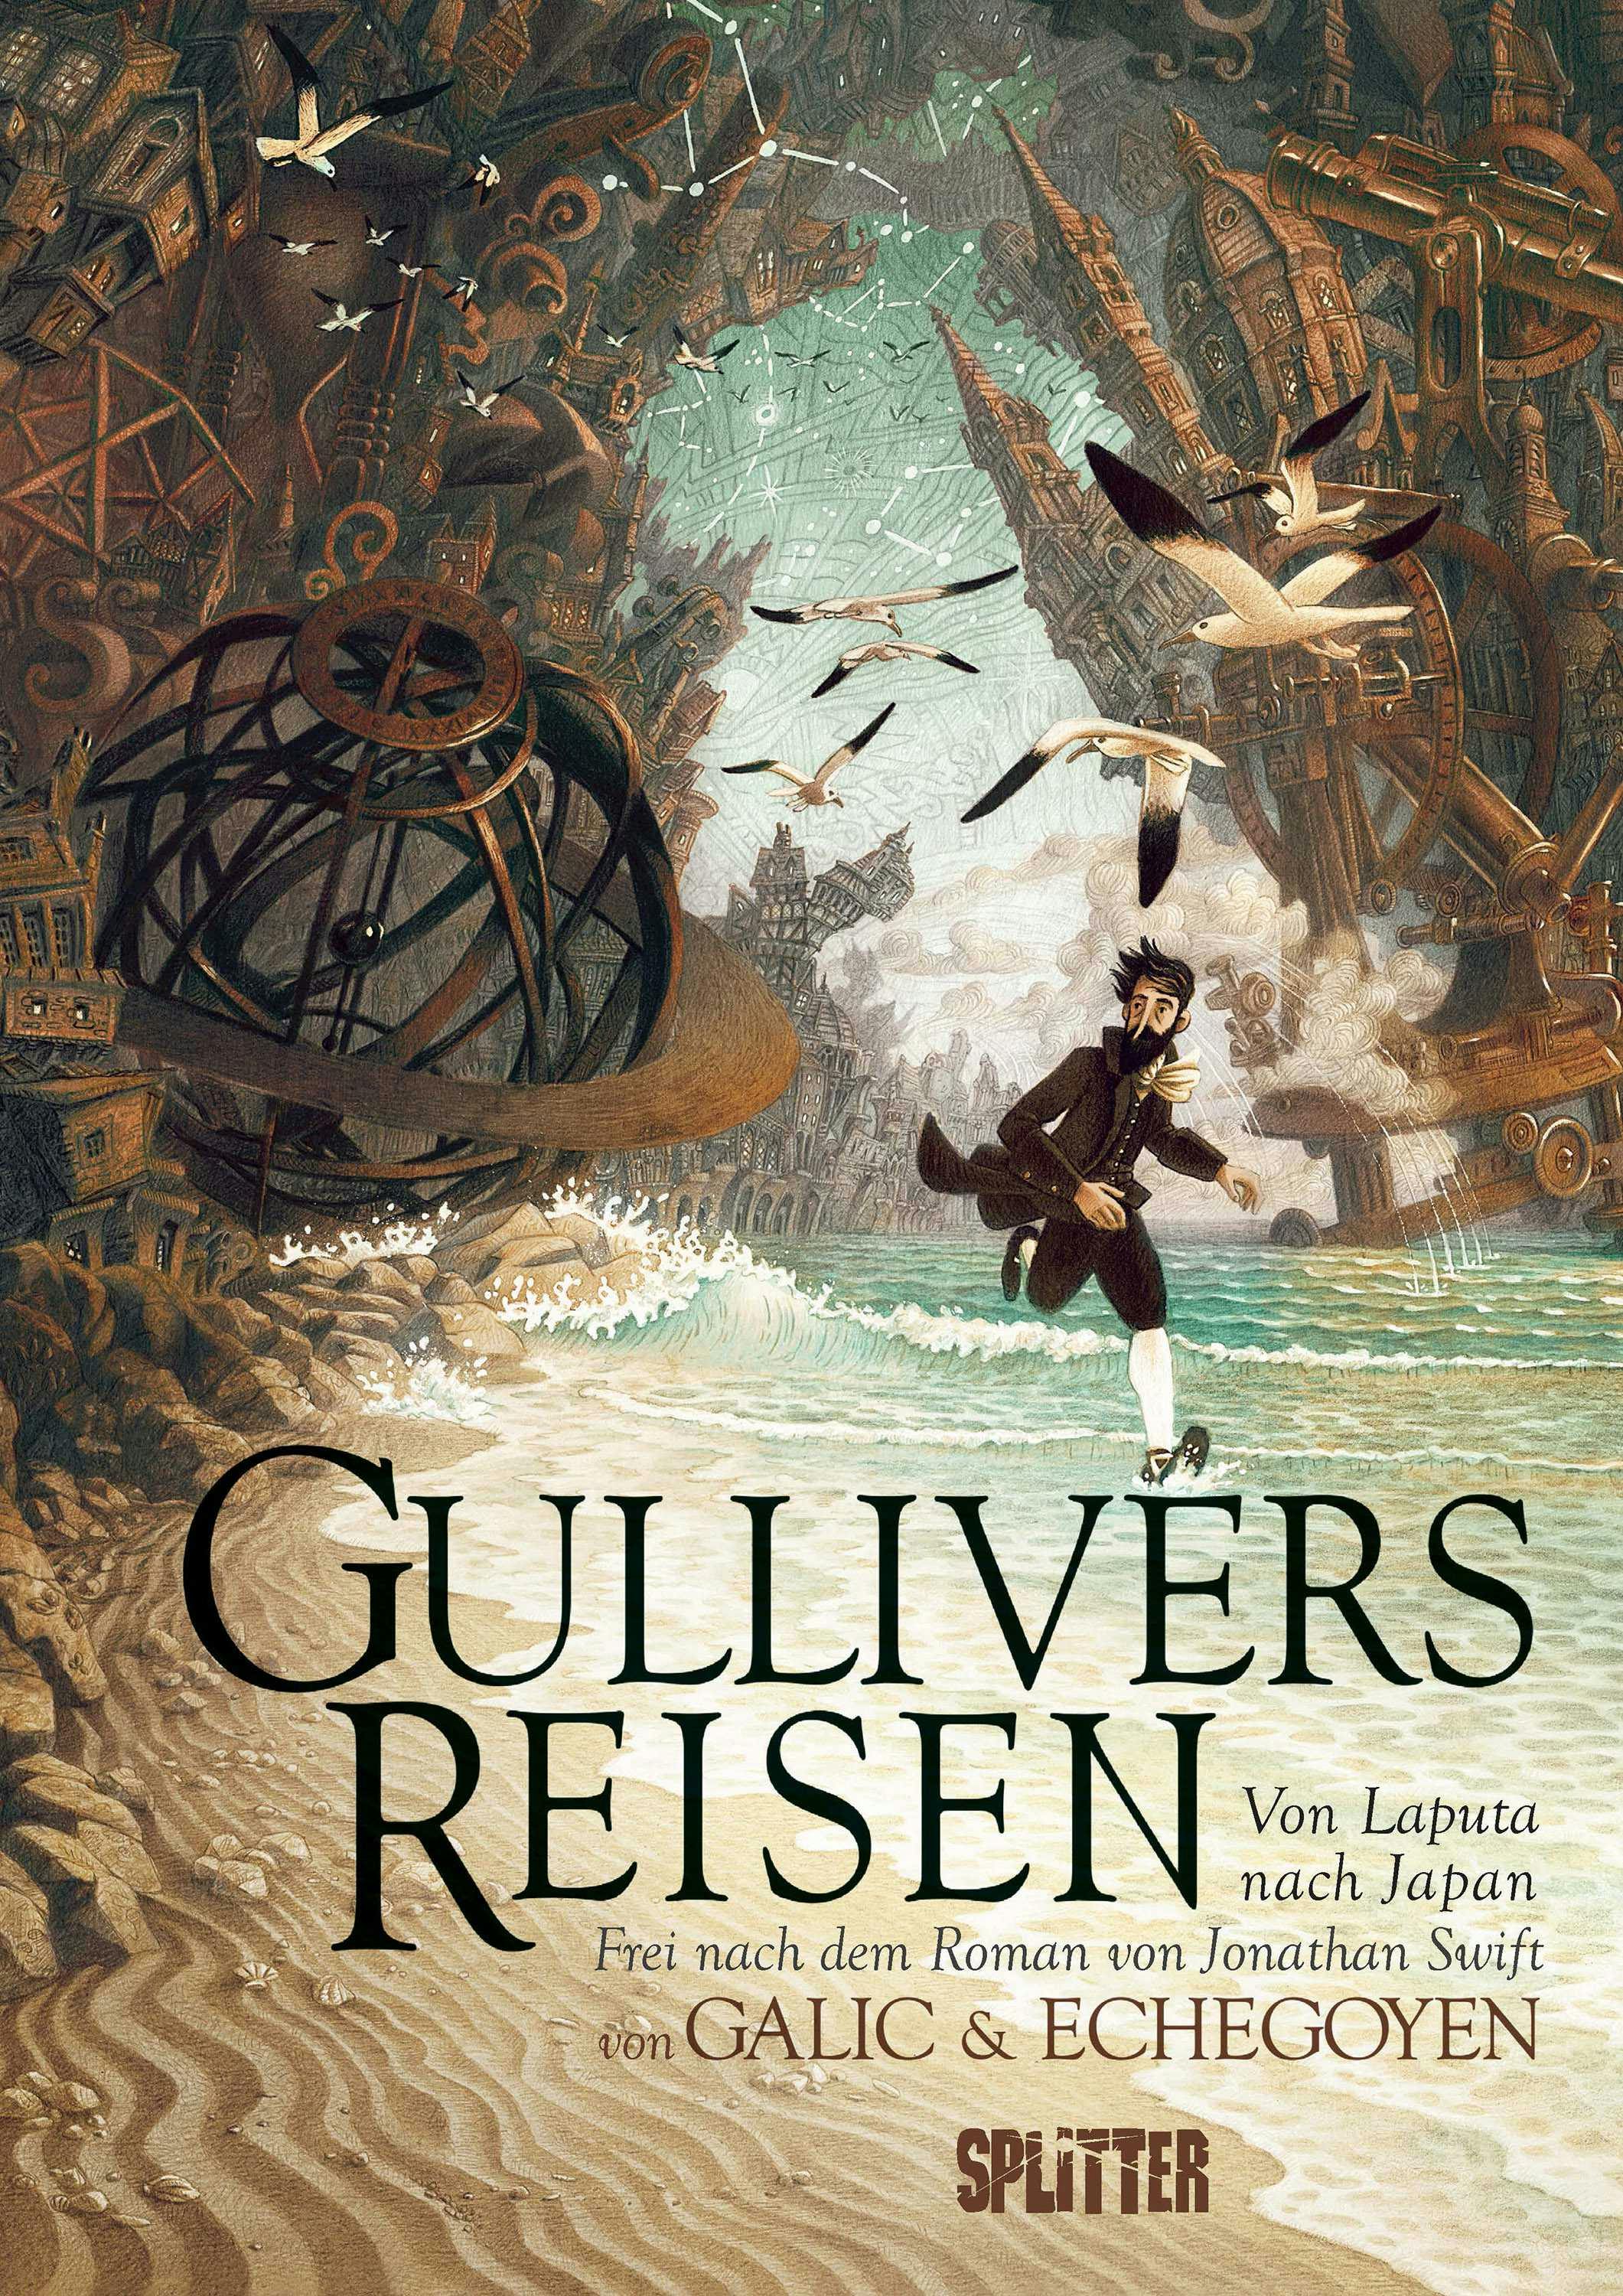 Gullivers Reisen: Von Laputa nach Japan (Graphic Novel) - Bertrand Galic, Jonathan Swift